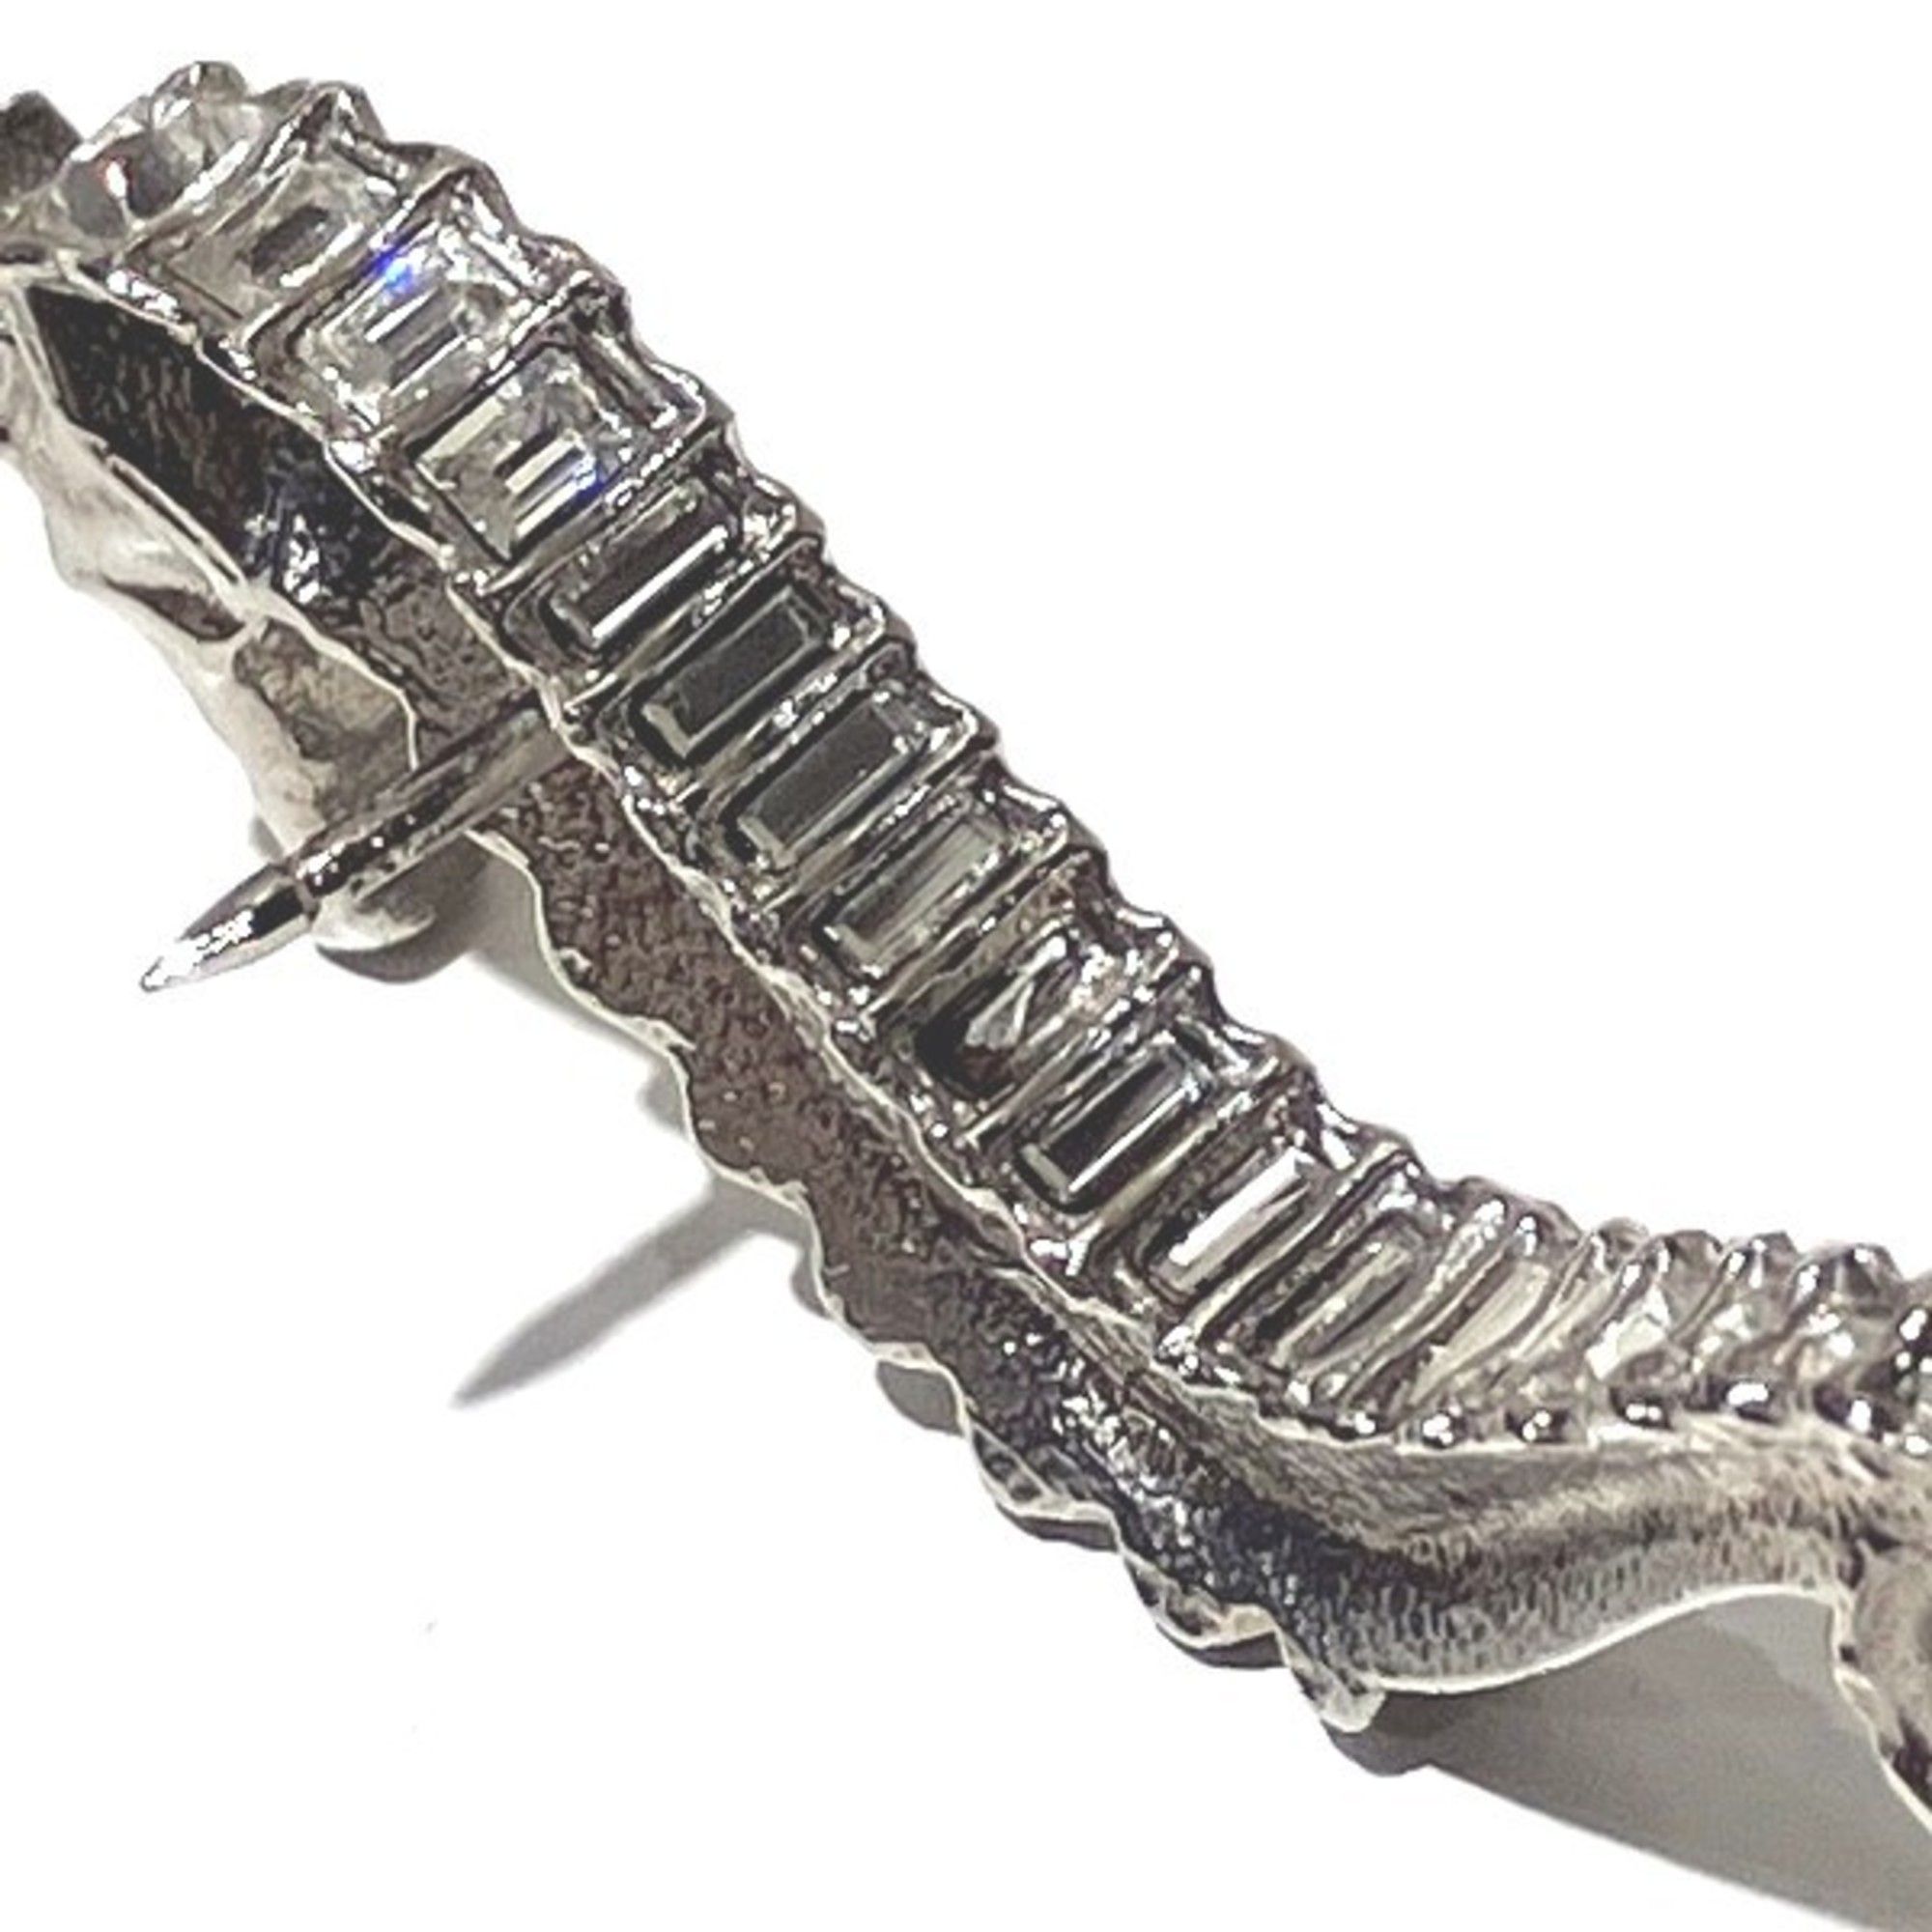 CHANEL Seahorse Light Stone Brand Accessories Brooch Women's